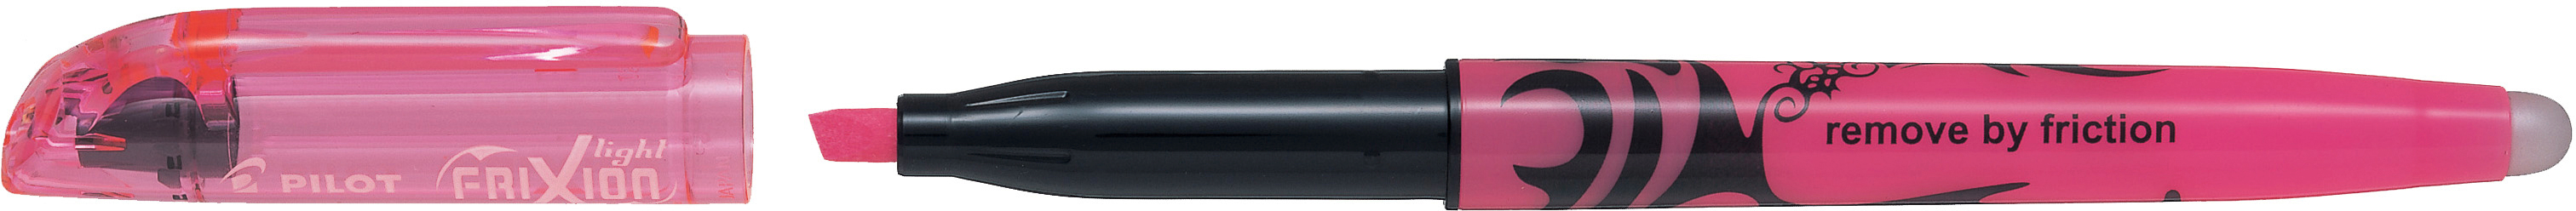 PILOT Textmarker FriXion Light 3.8mm SW-FL-P pink, corrigeable